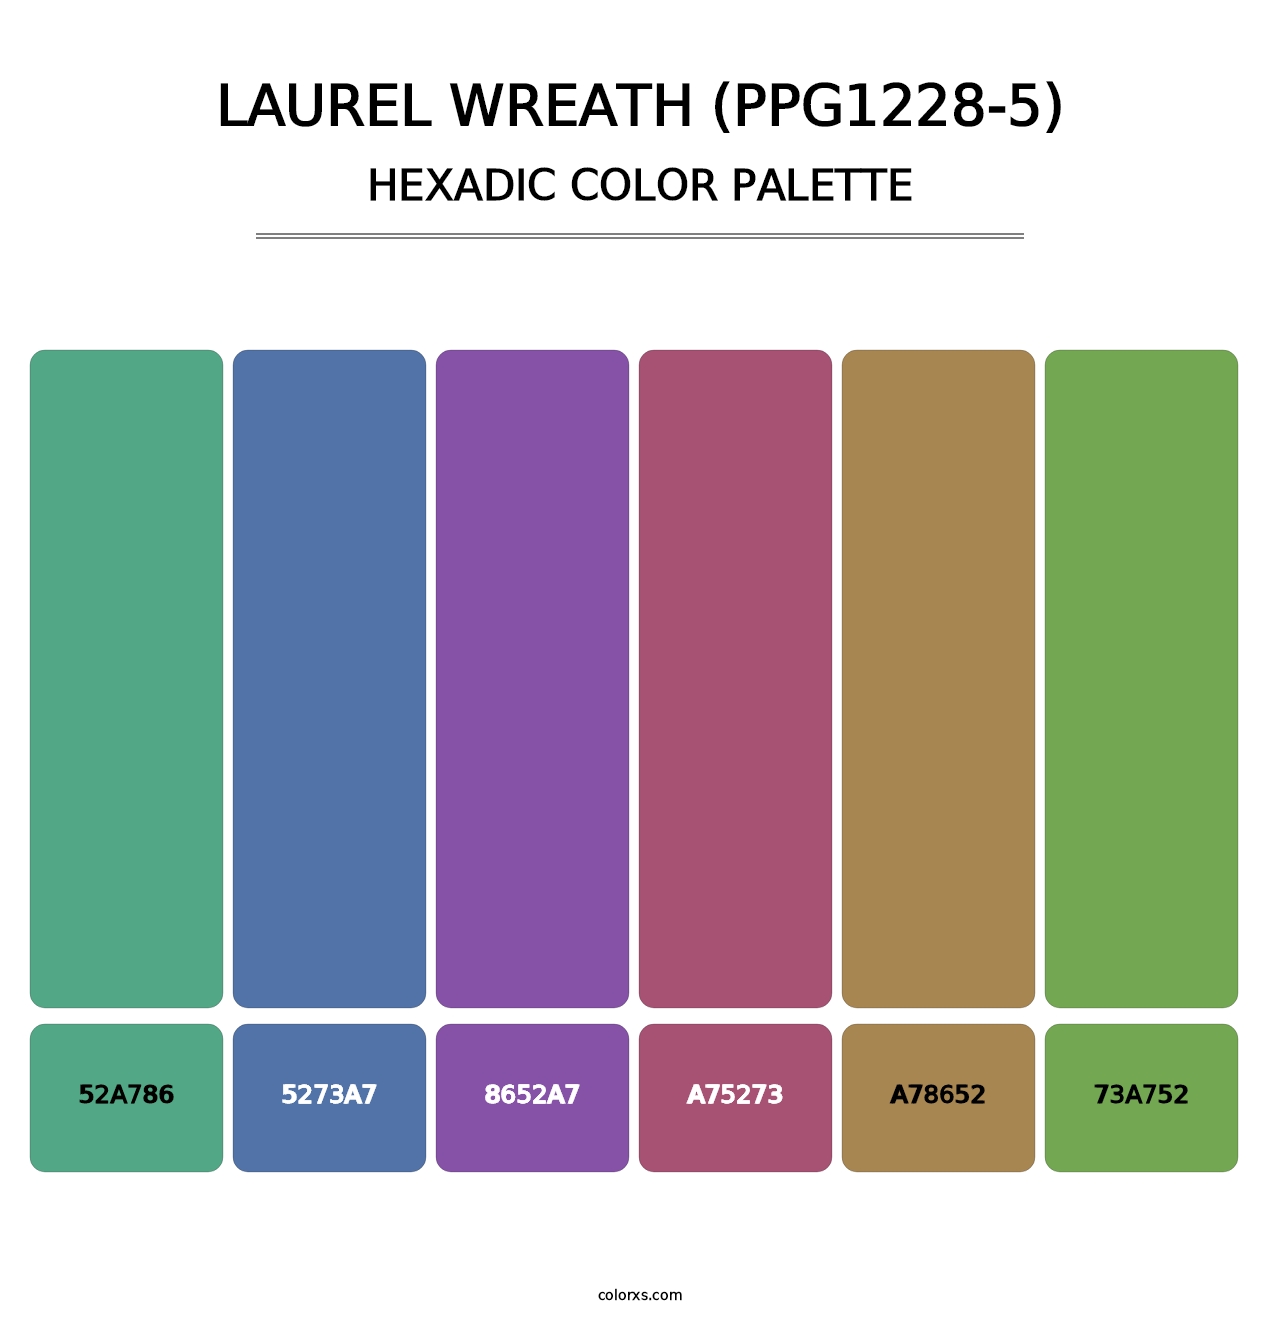 Laurel Wreath (PPG1228-5) - Hexadic Color Palette